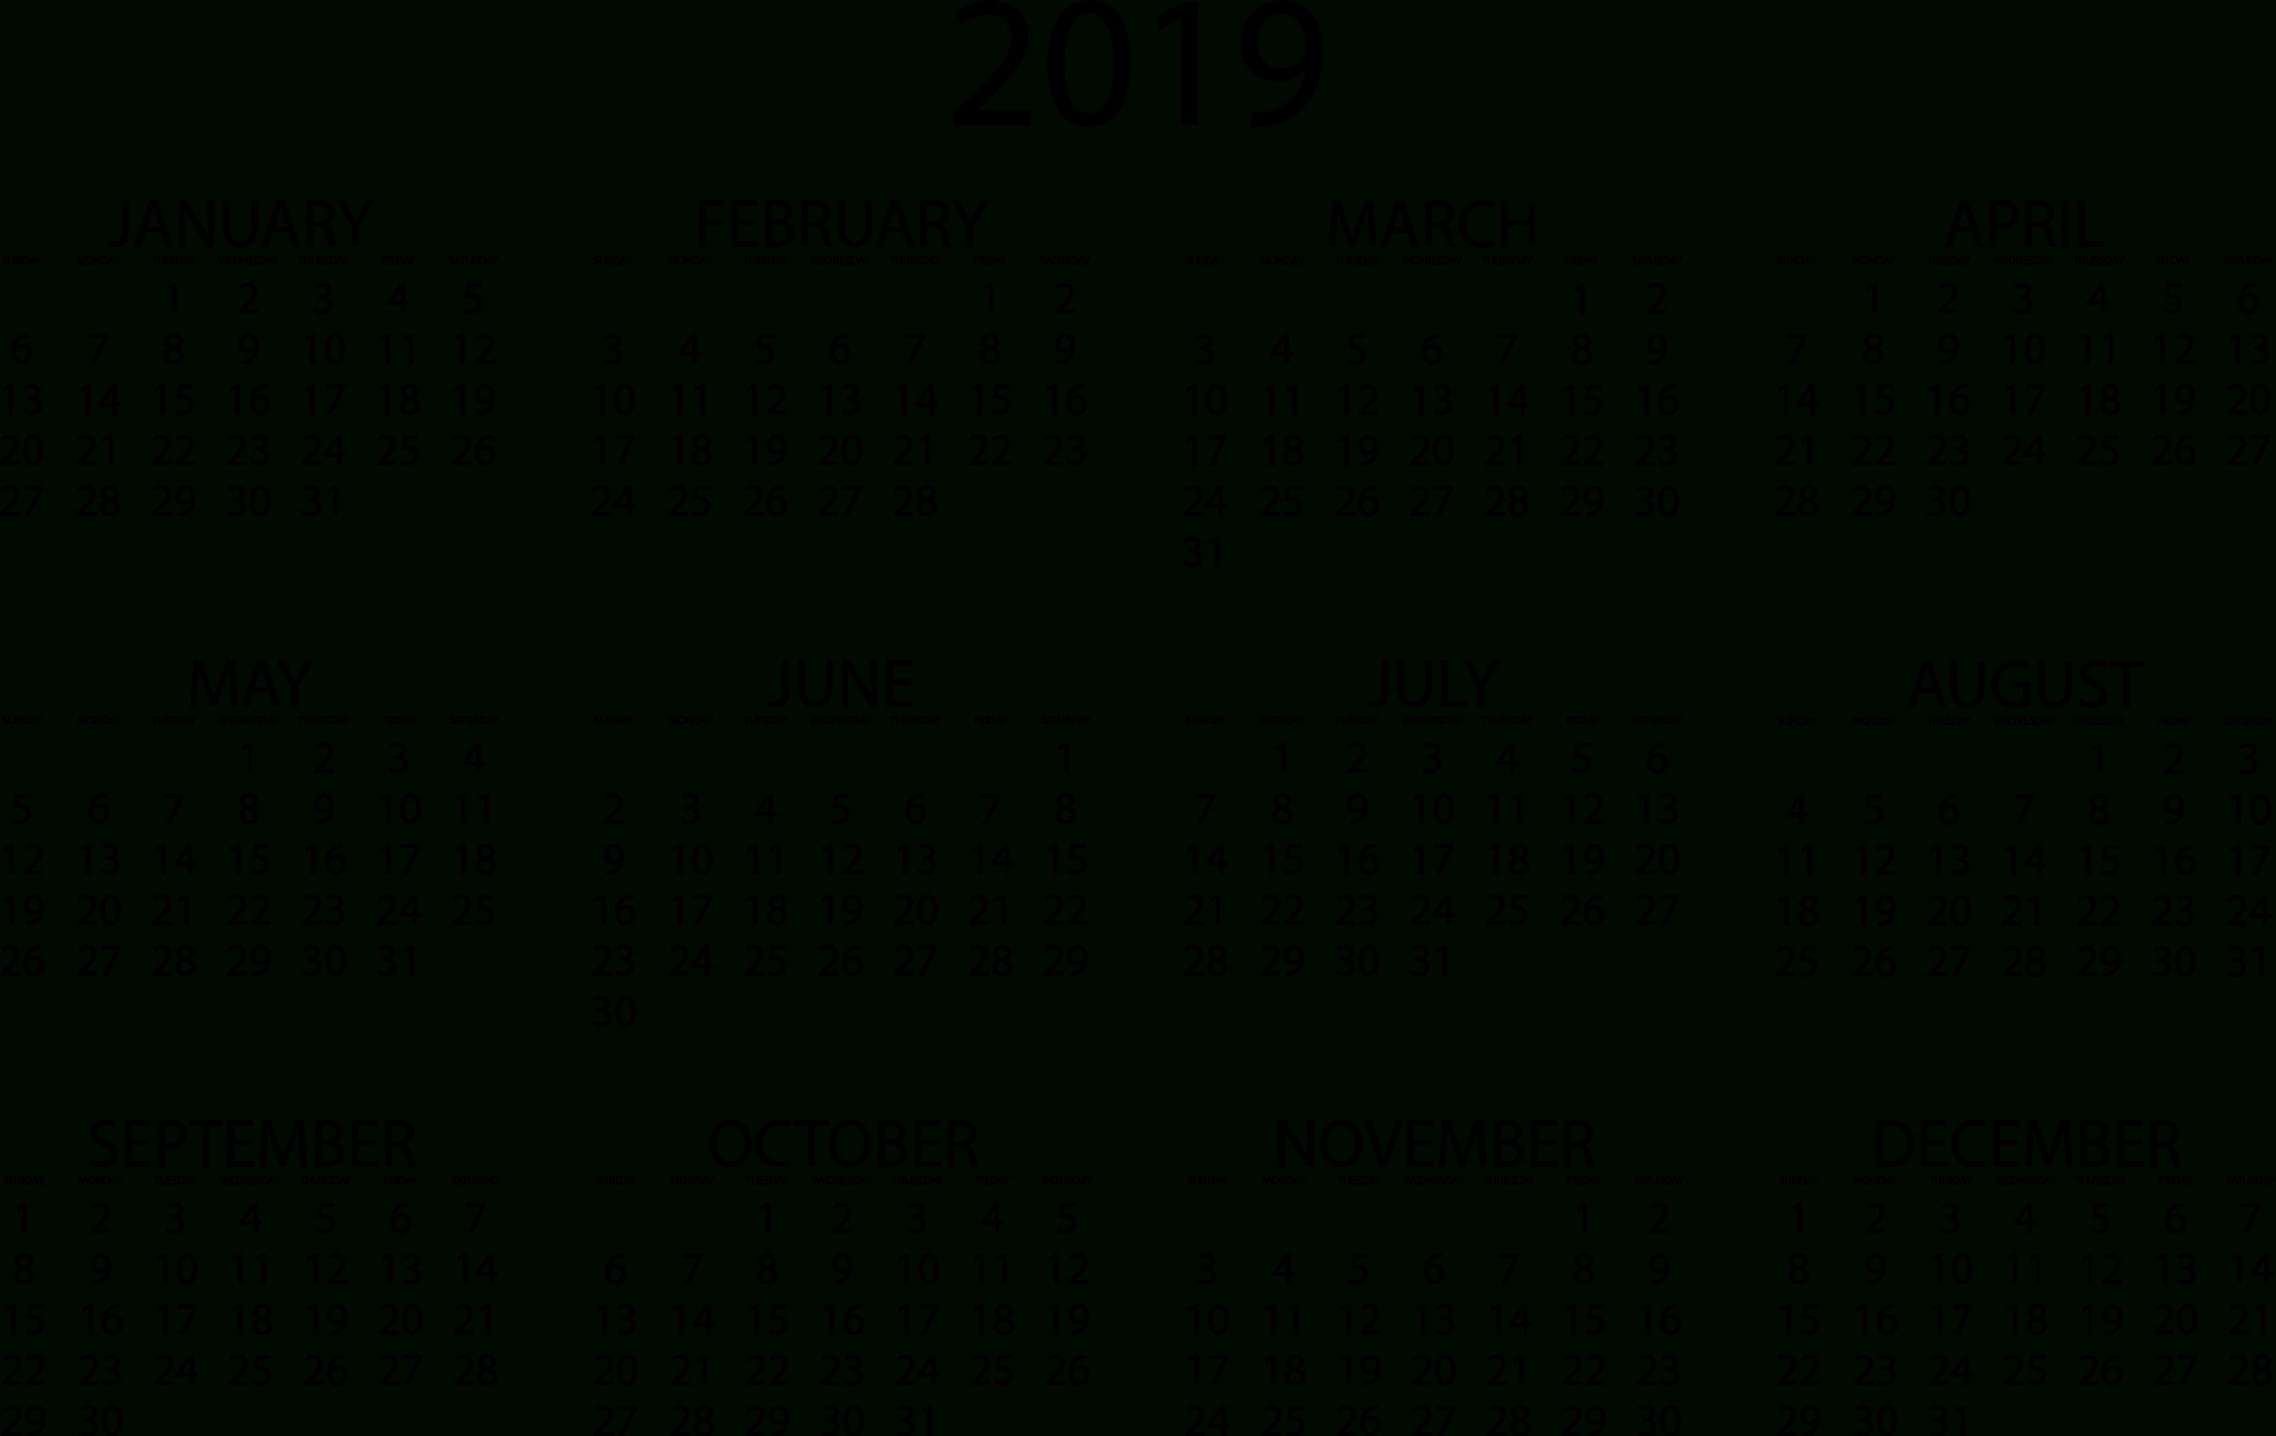 2019 Calendars Download Pdf Templates Black And White Calendar Template